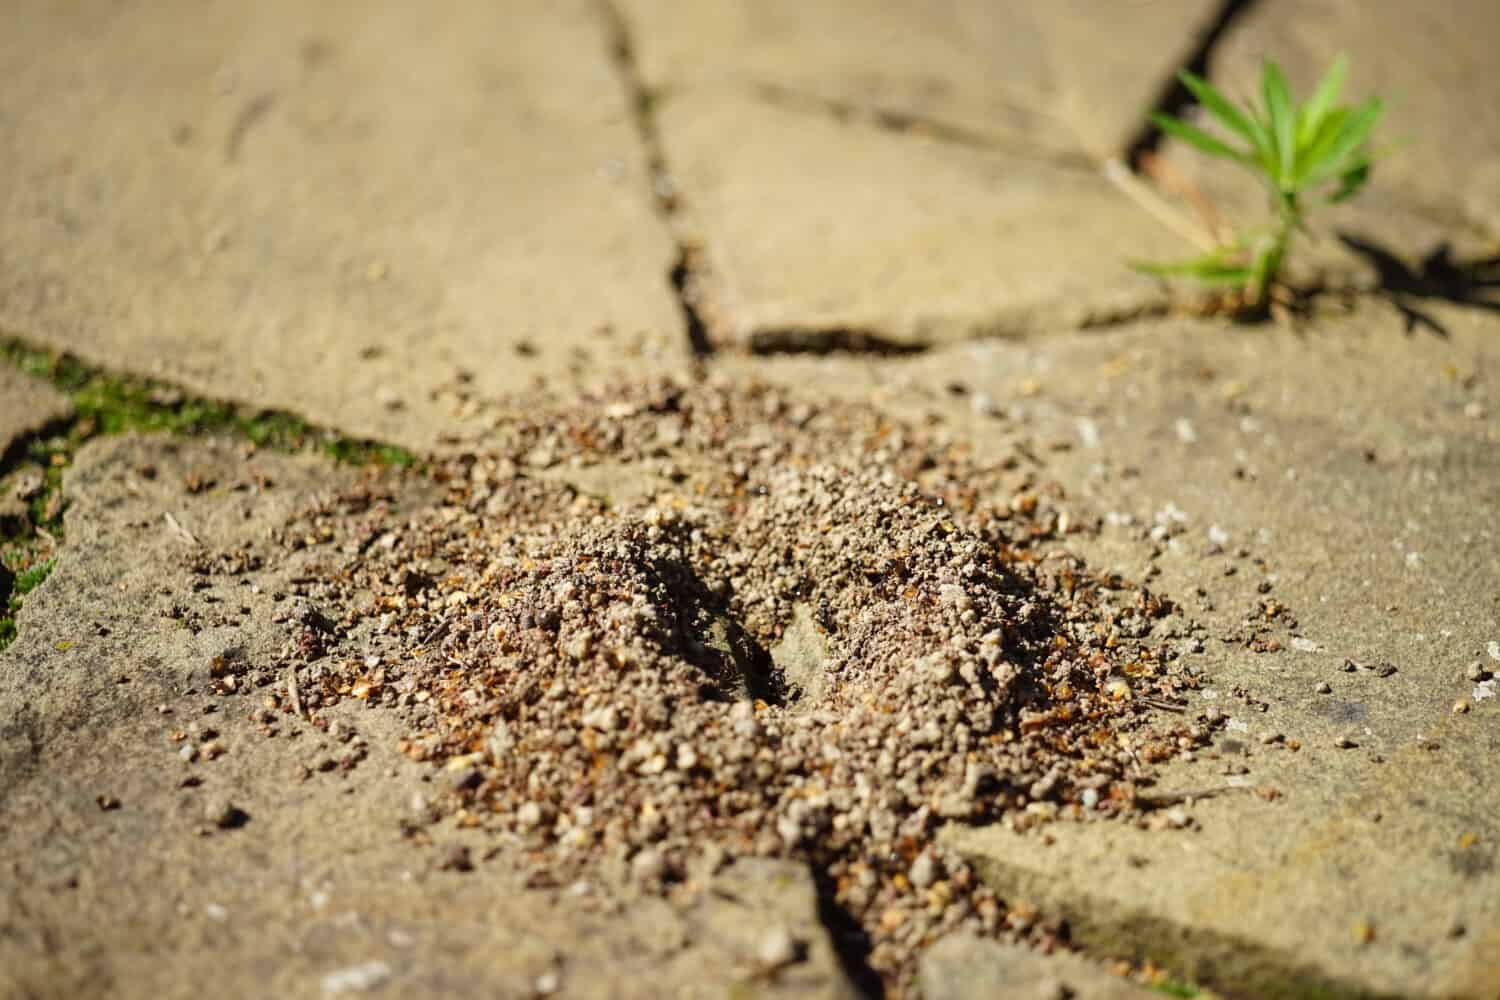 Ants in the sidewalk crack